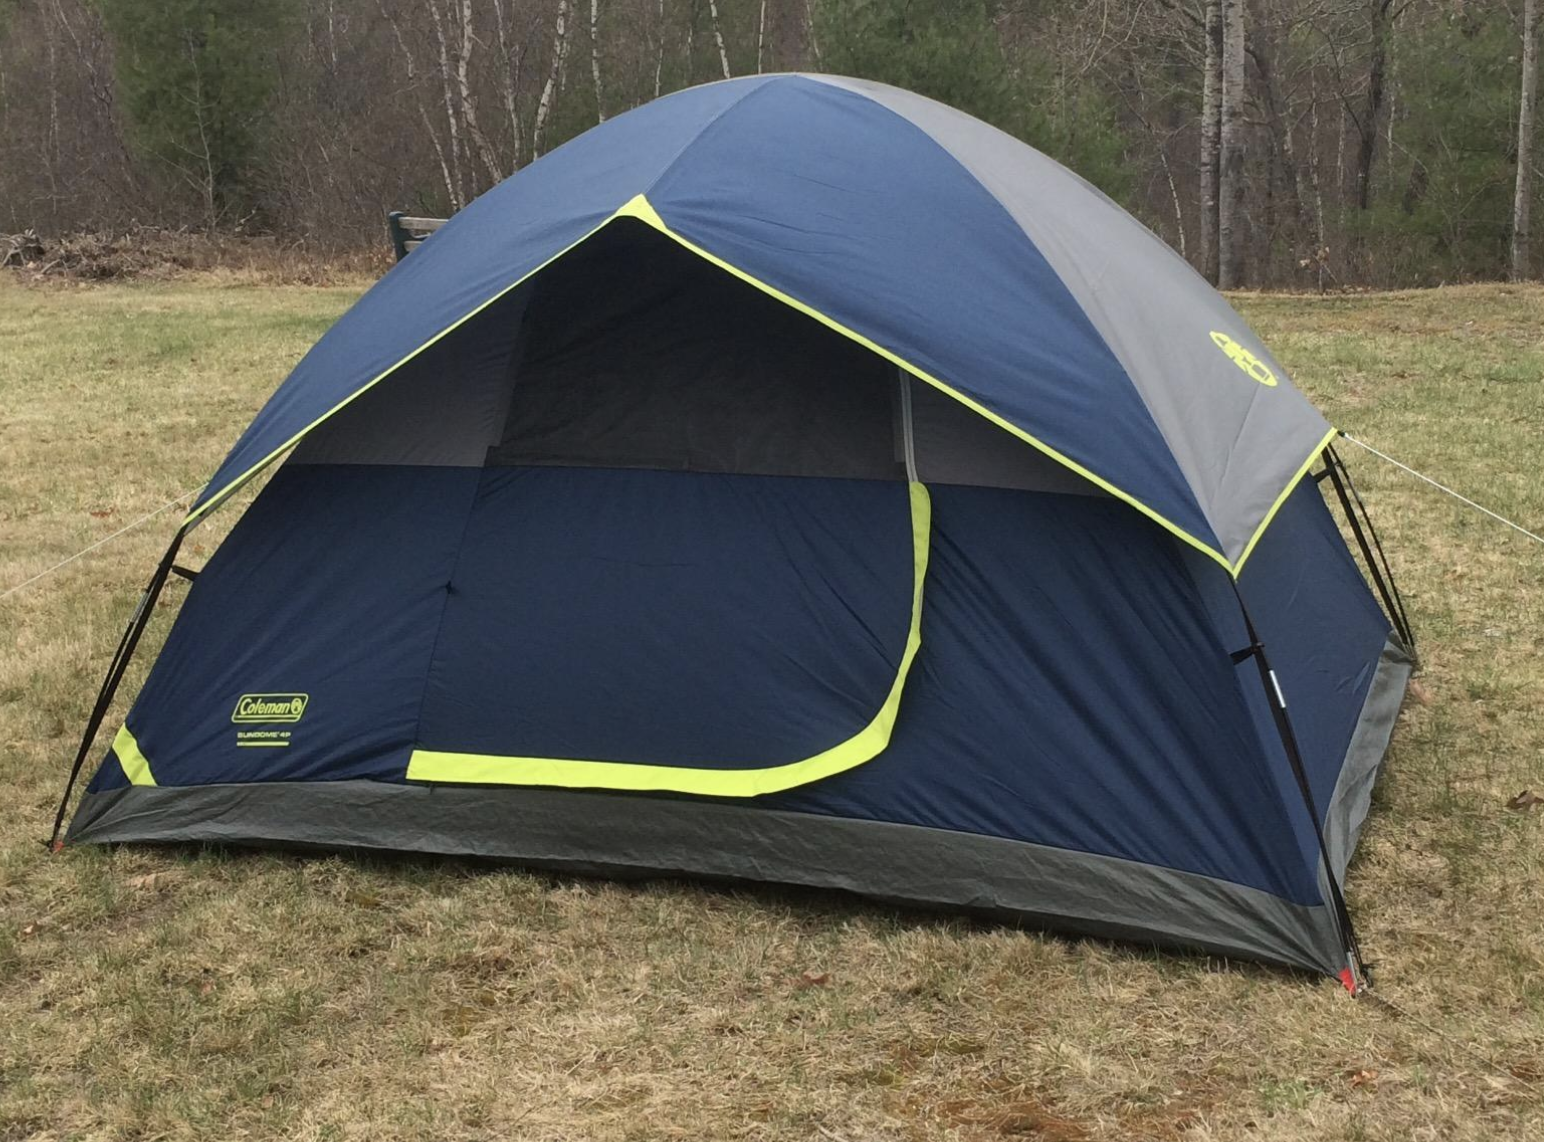 the dark blue tent